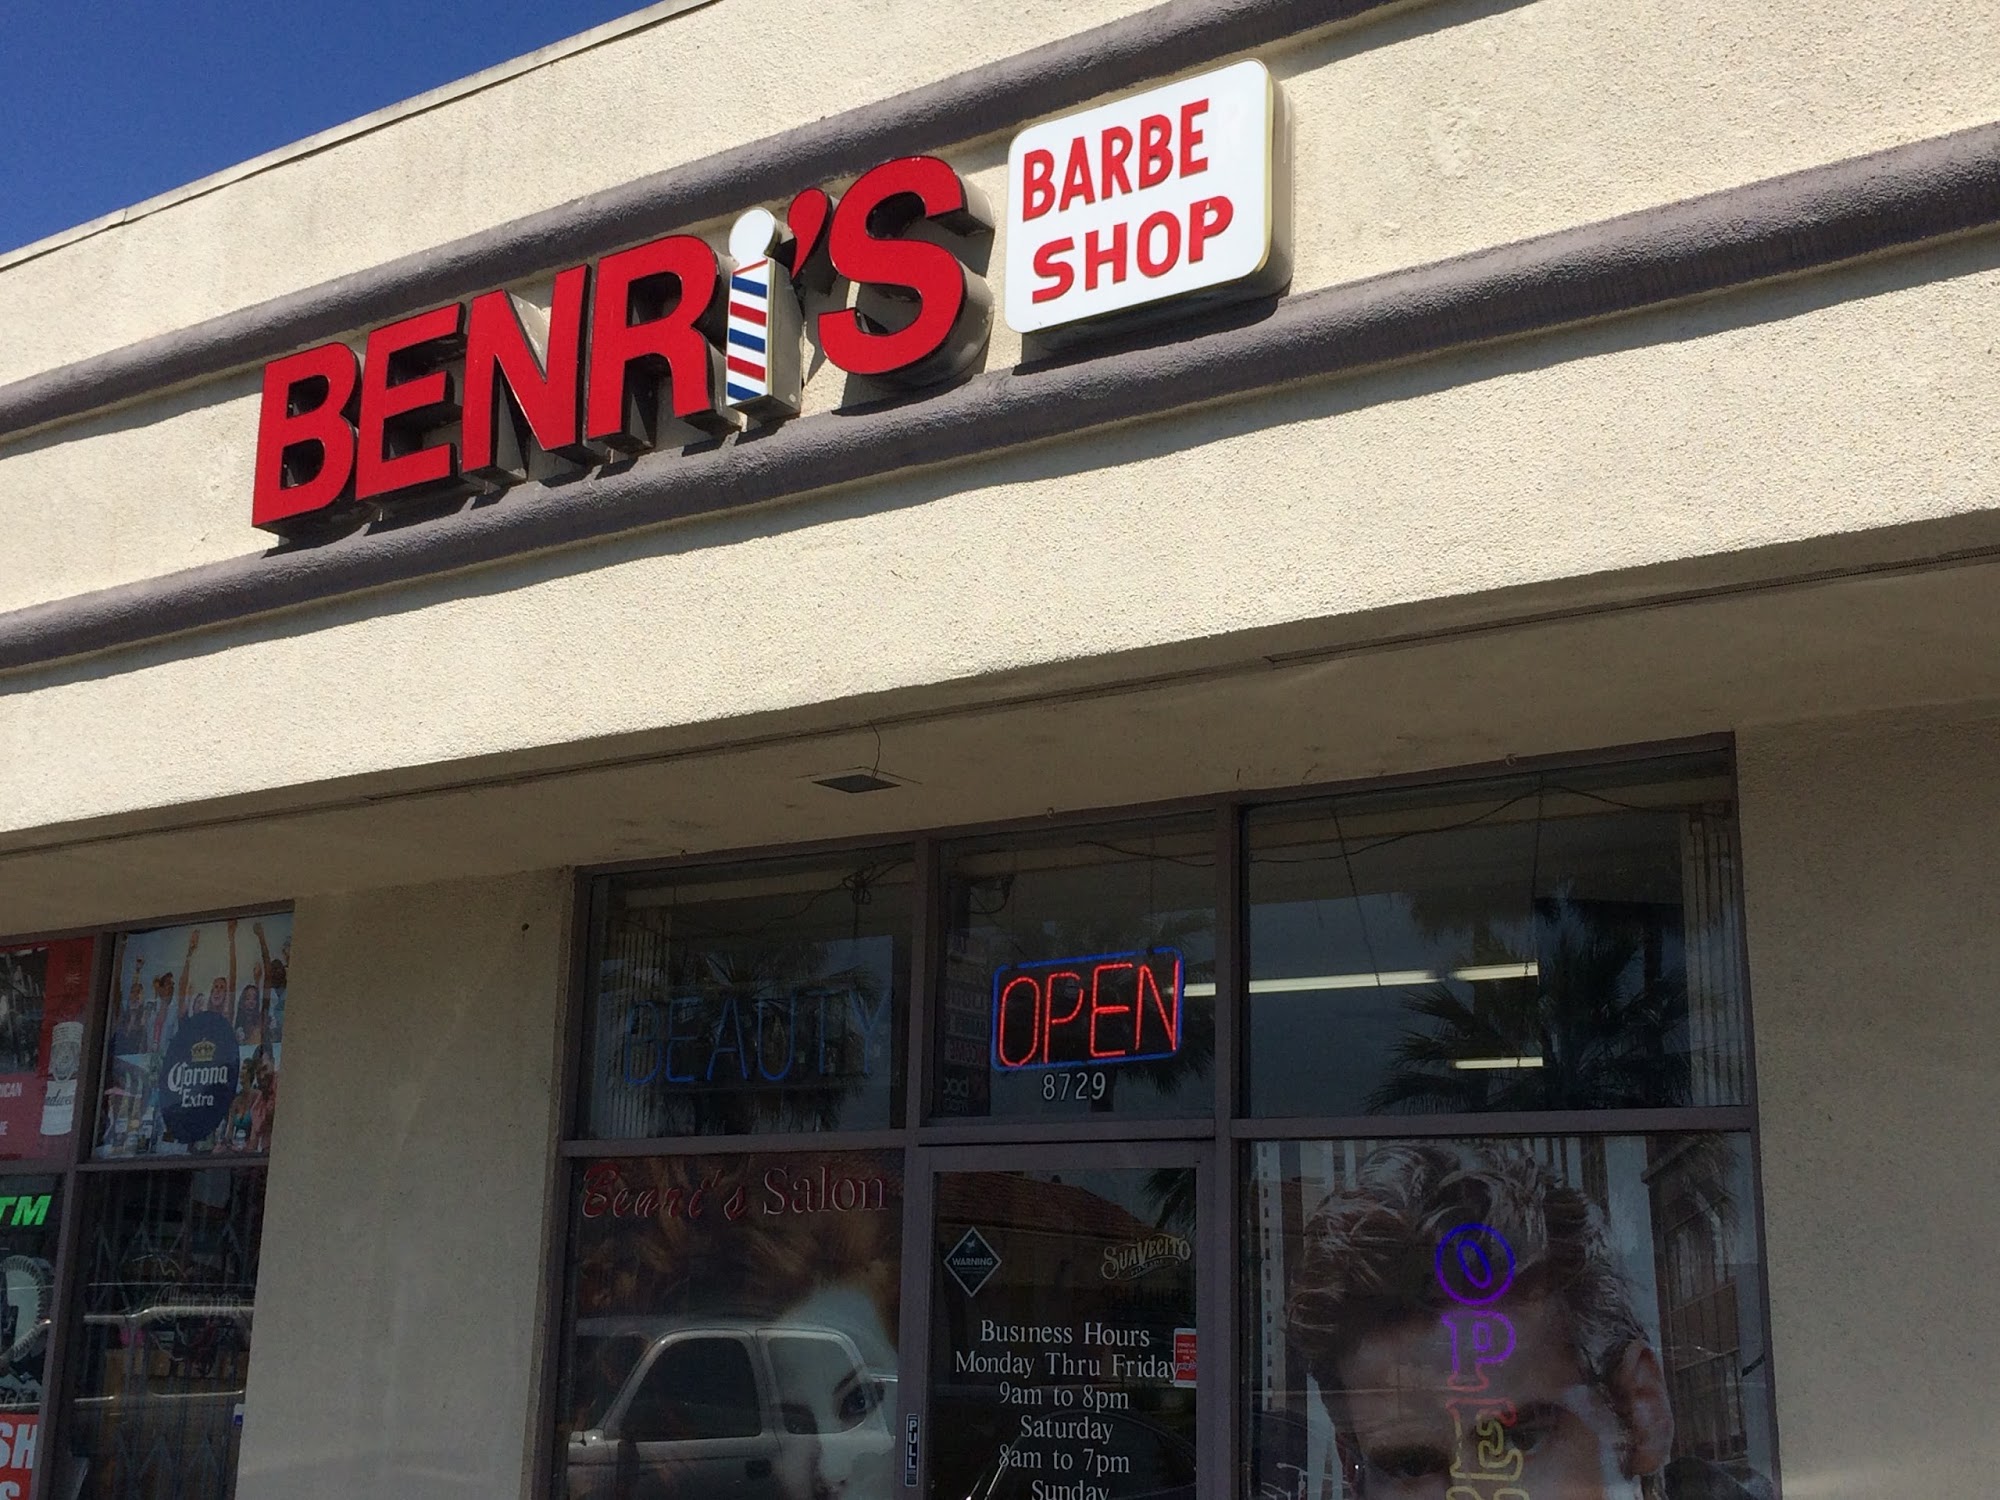 Benri's Barber Shop